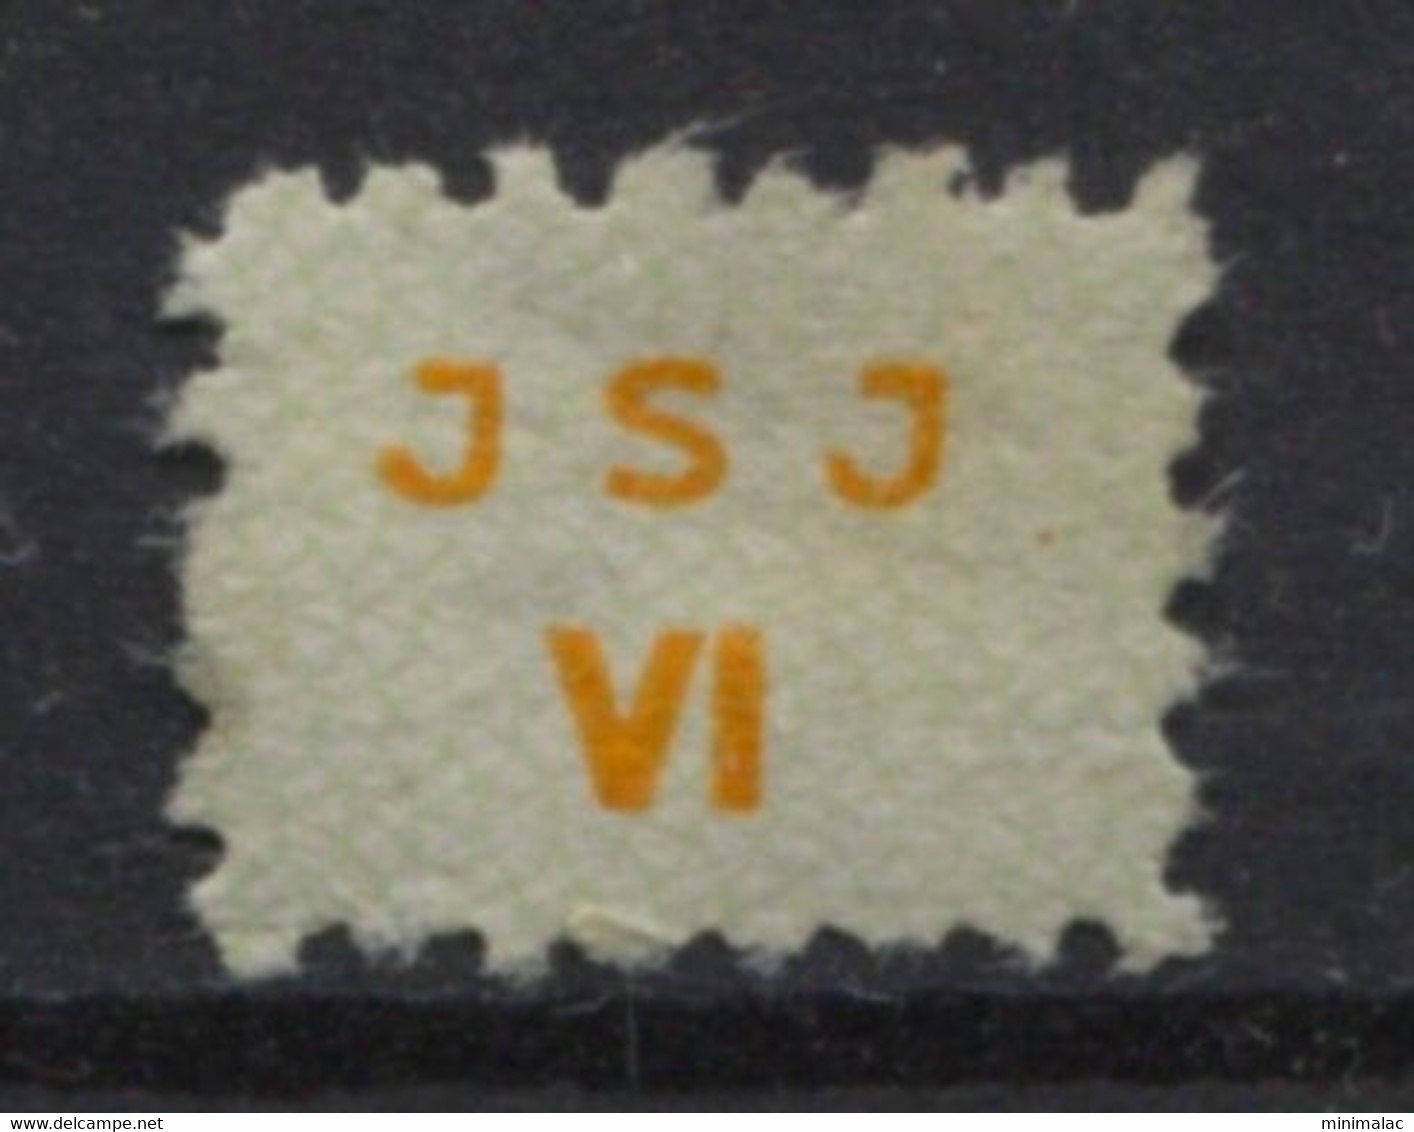 Yugoslavia 1947, Stamp For Membership, JSJ, Labor Union, Administrative Stamp - Revenue, Tax Stamp, VI - Officials